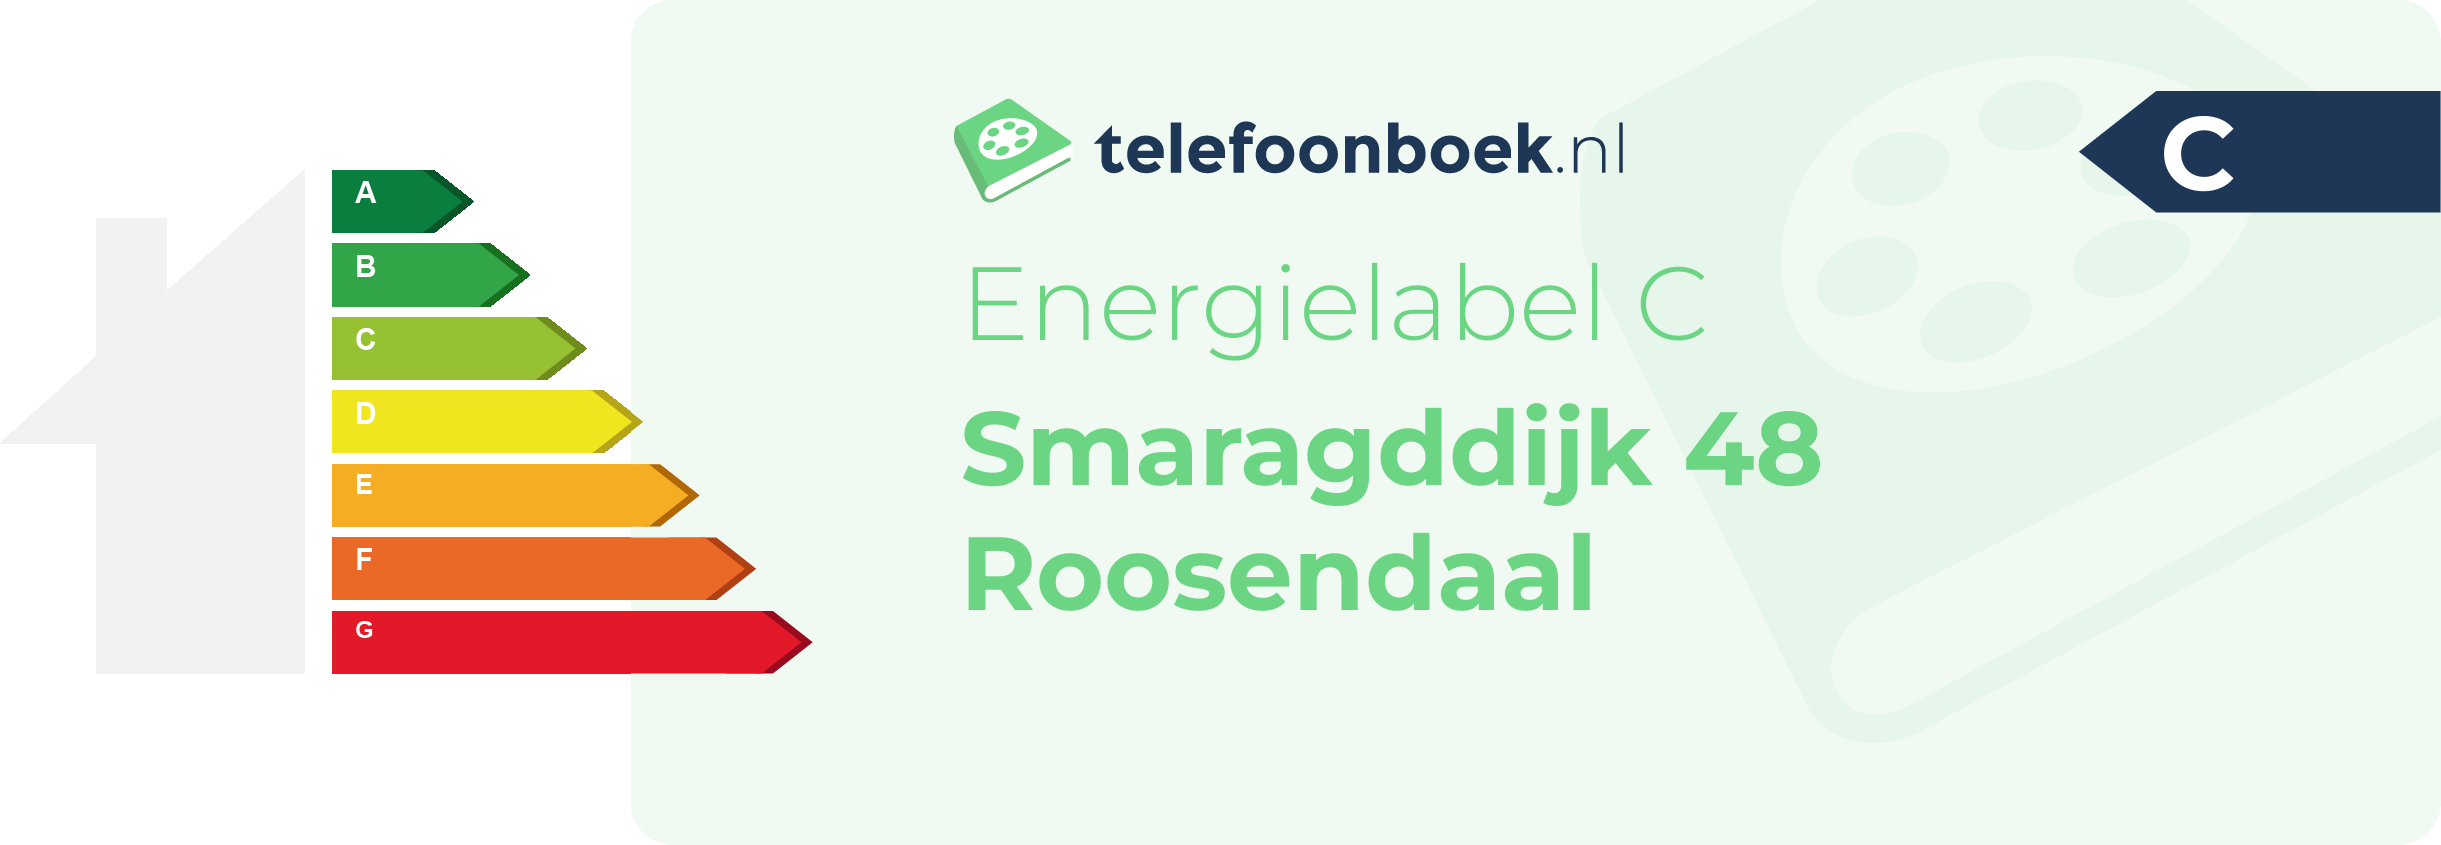 Energielabel Smaragddijk 48 Roosendaal